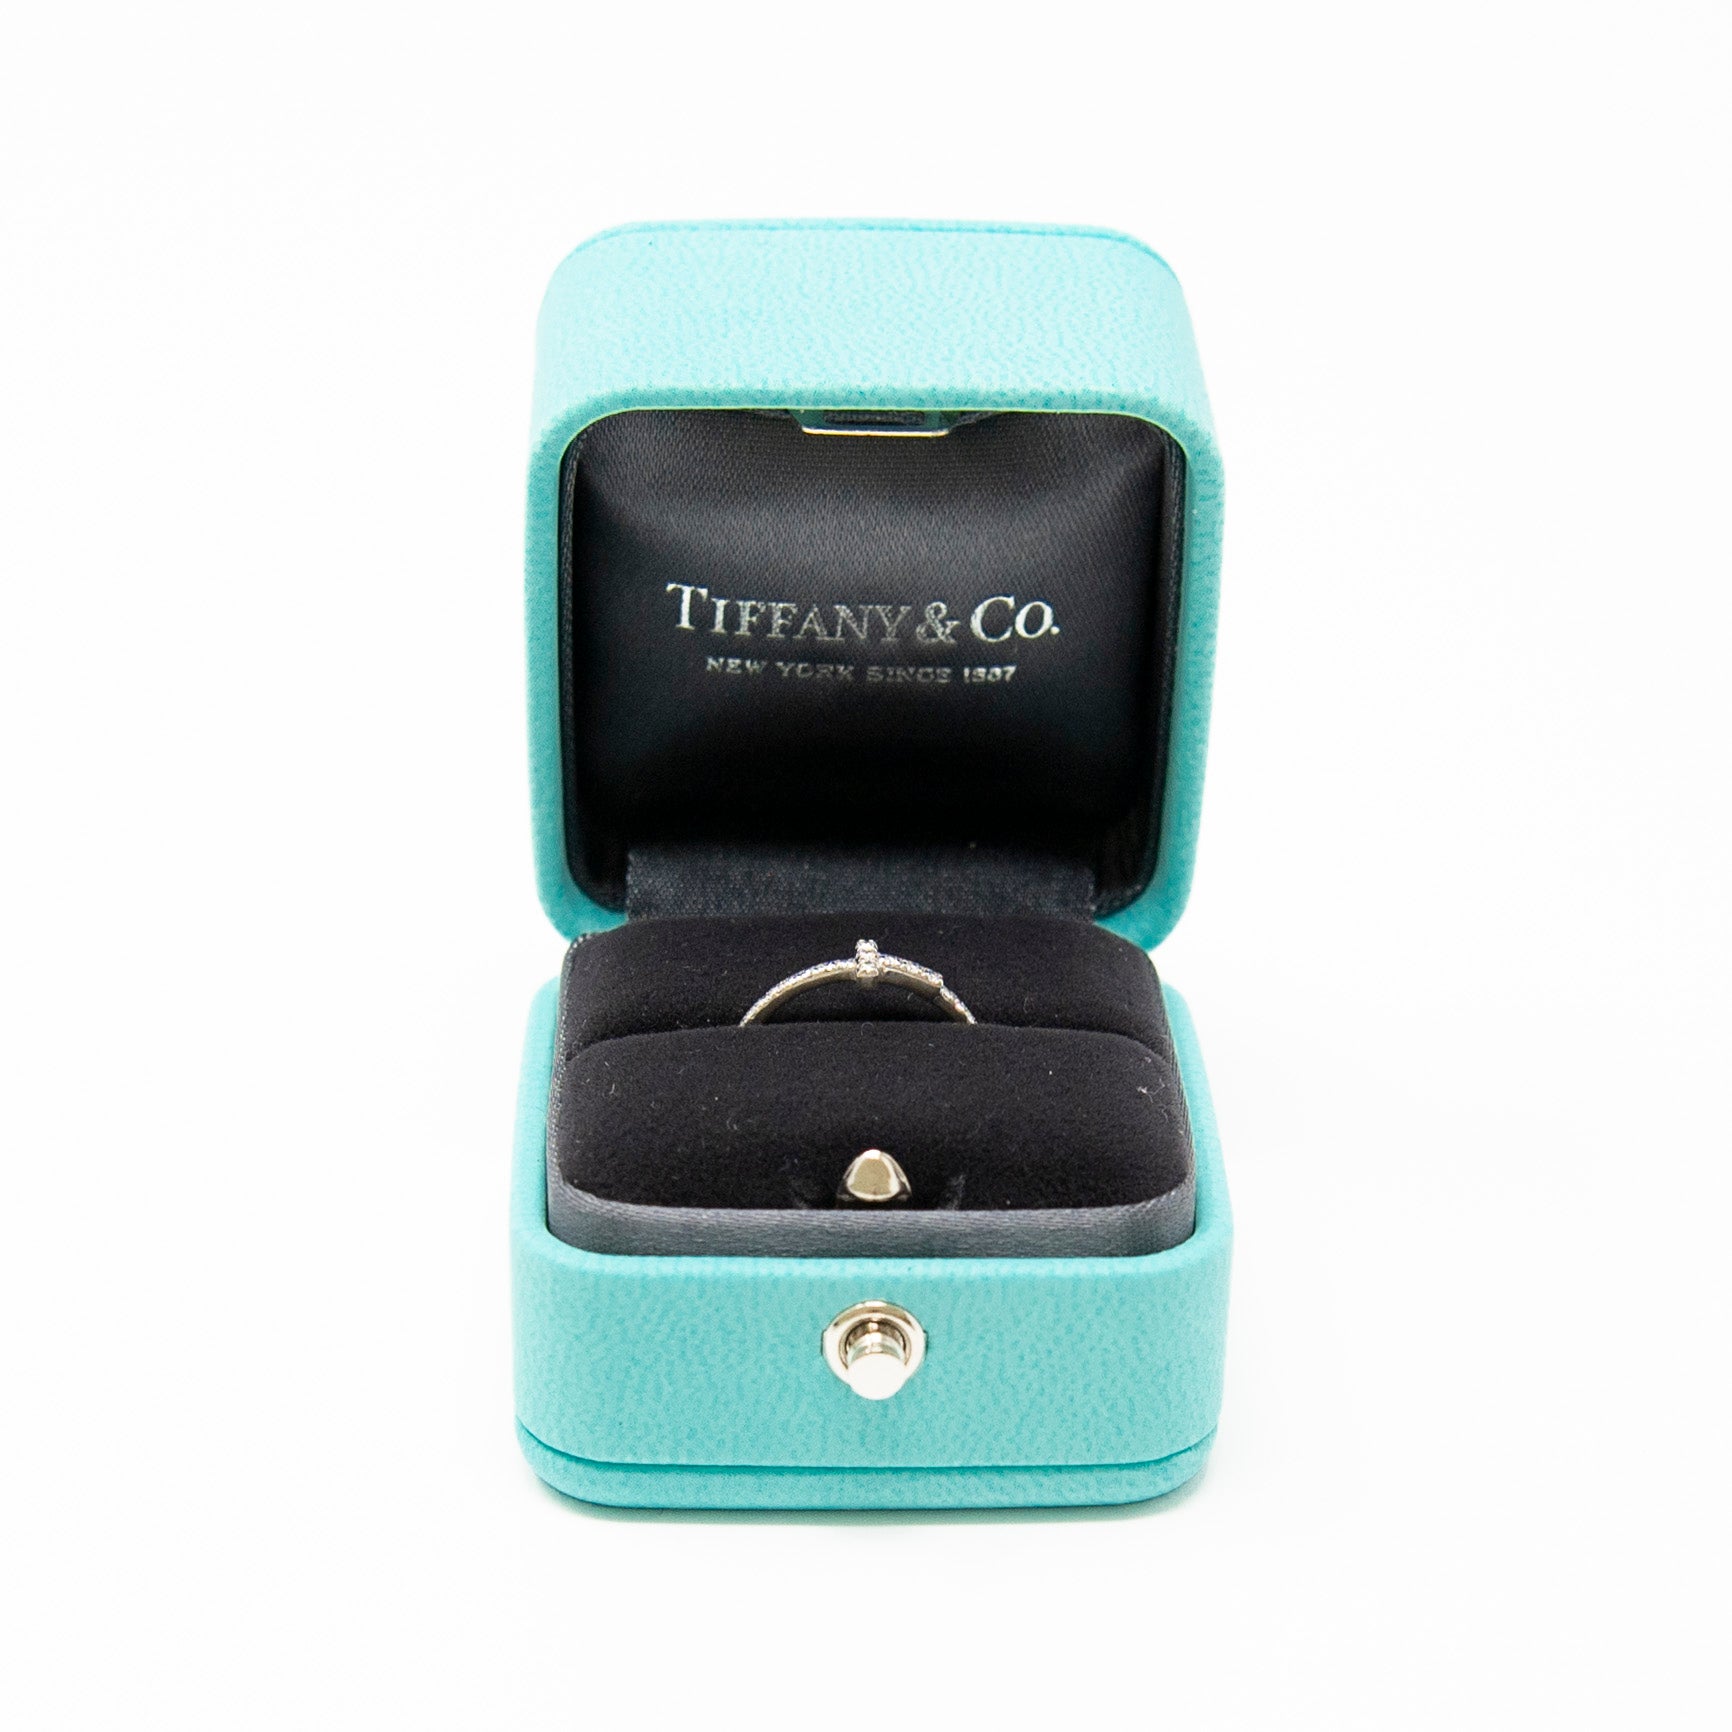 Tiffany & Co. Diamond Wire Band Ring